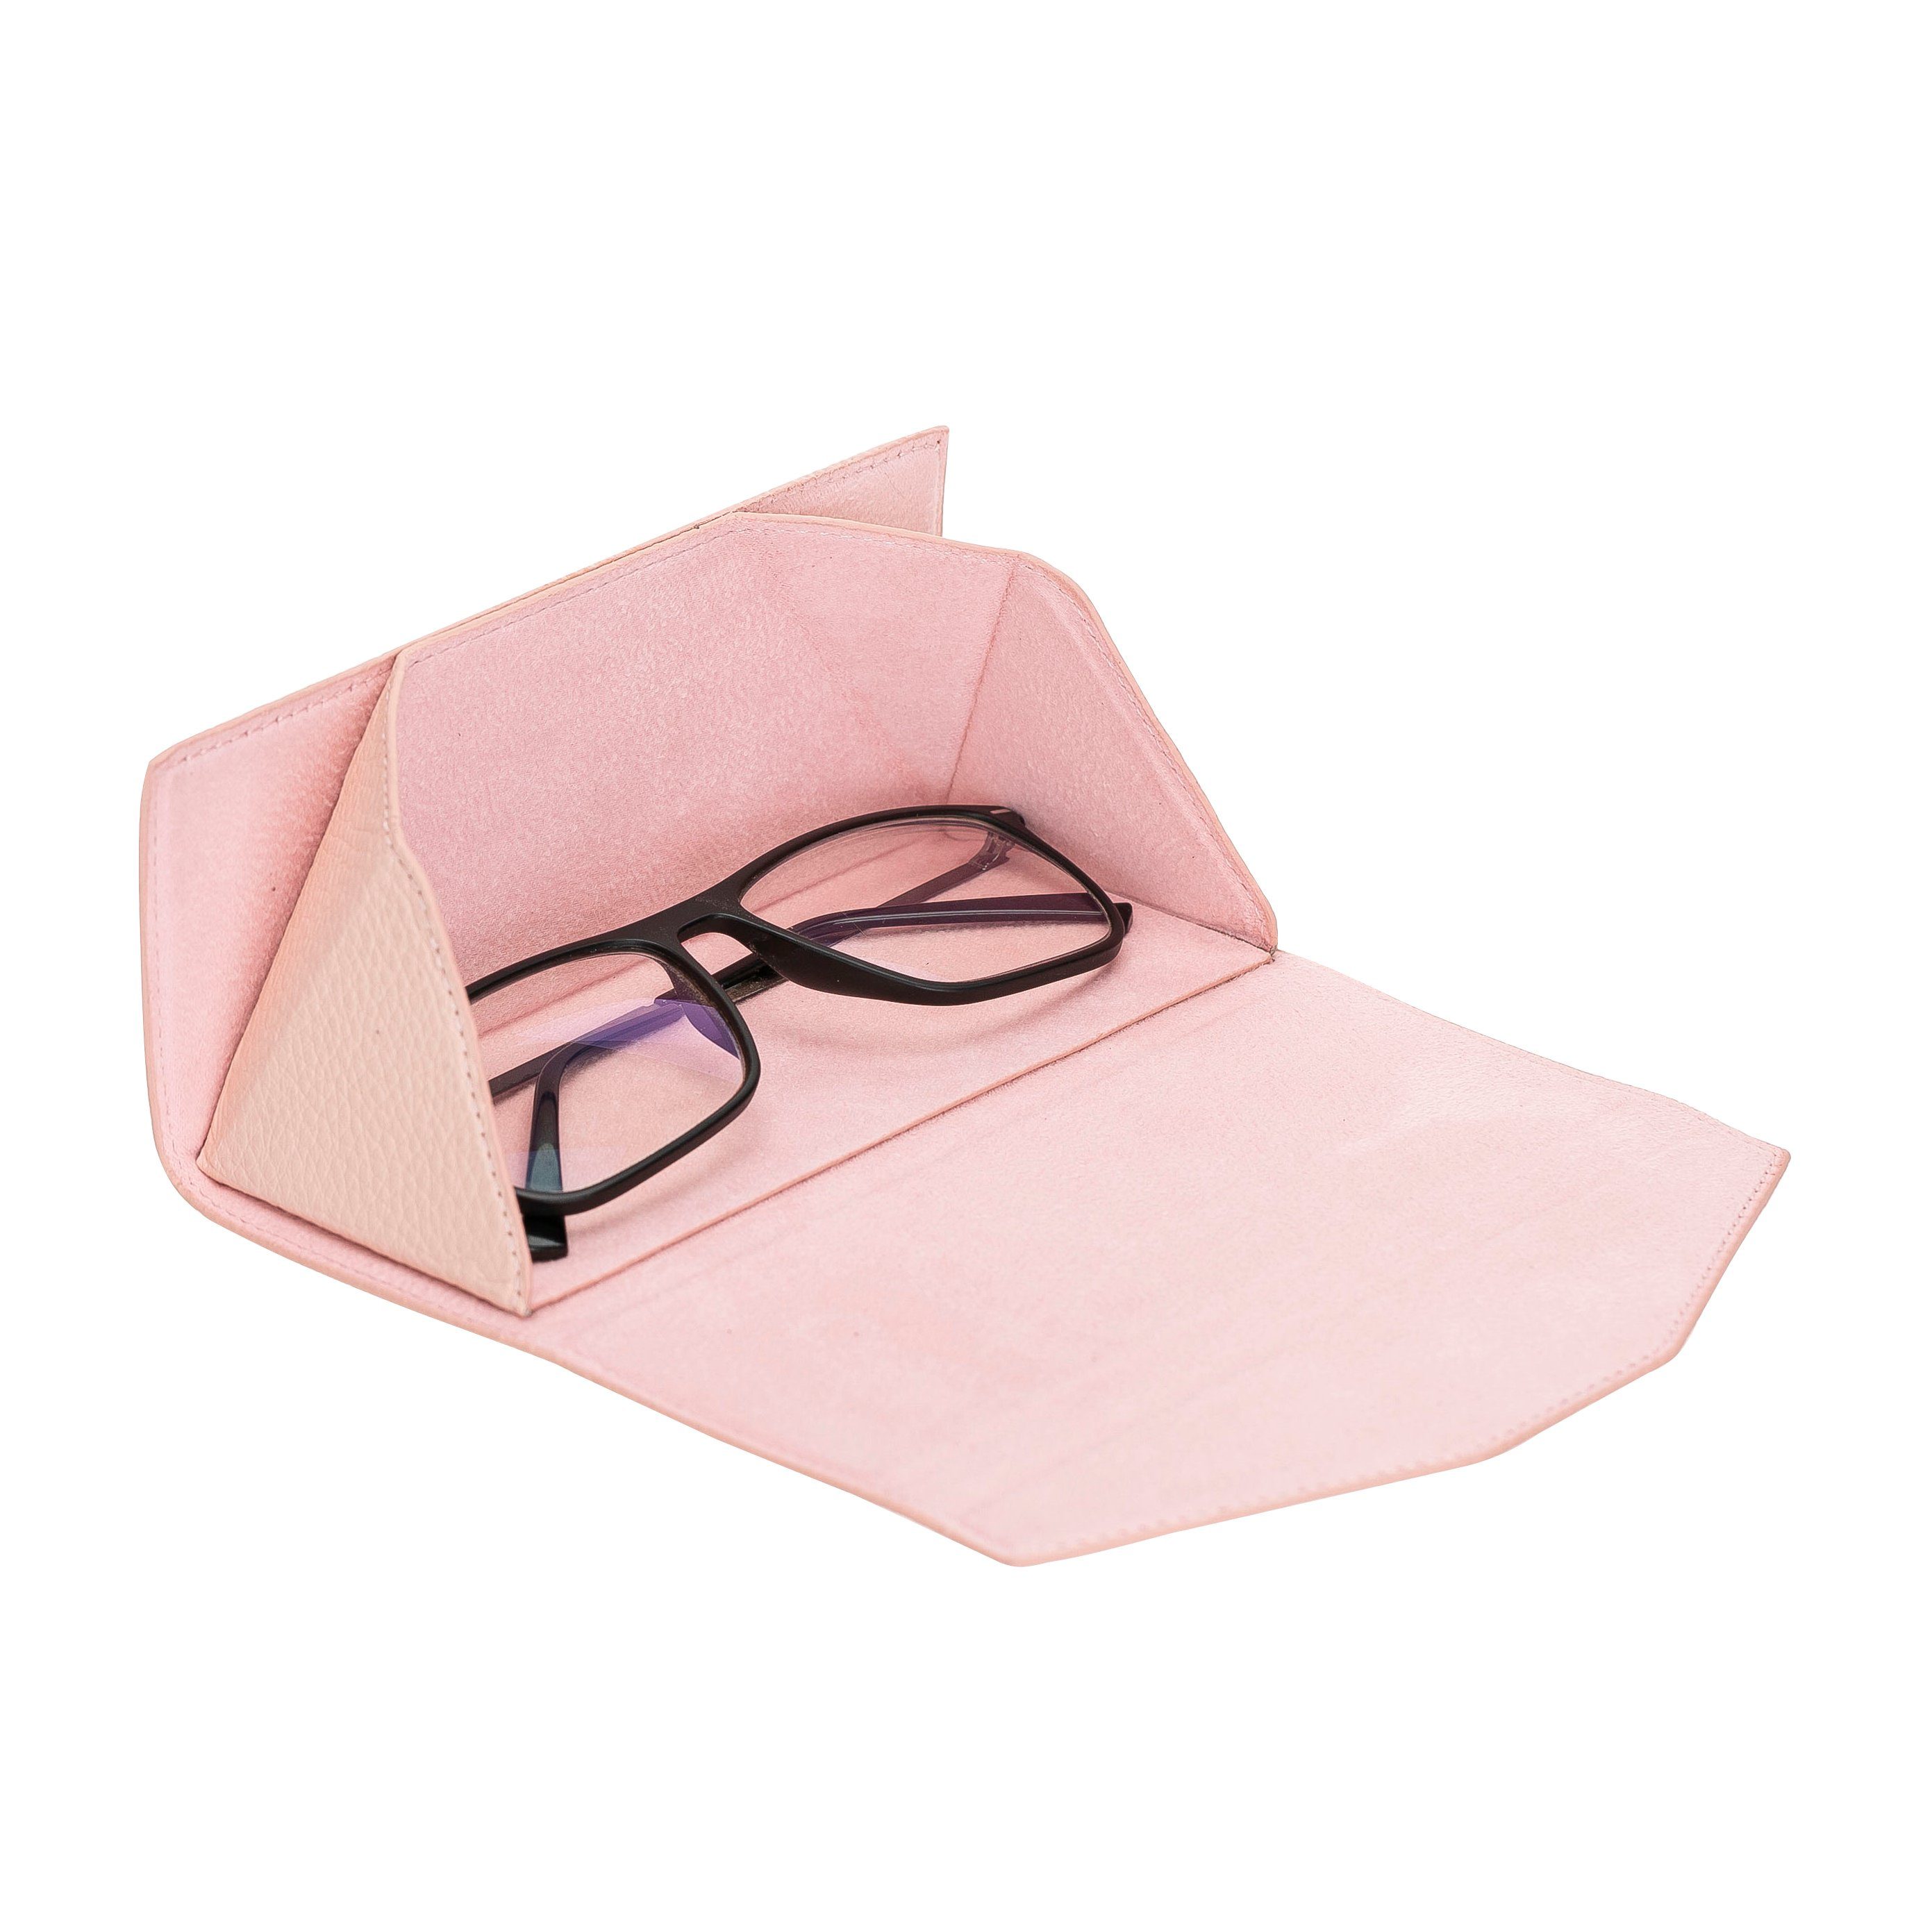 Solo Pelle Brillenetui Faltbares Brillenetui aus echtem Leder, tragbare Brillenbox zum falten Rosa